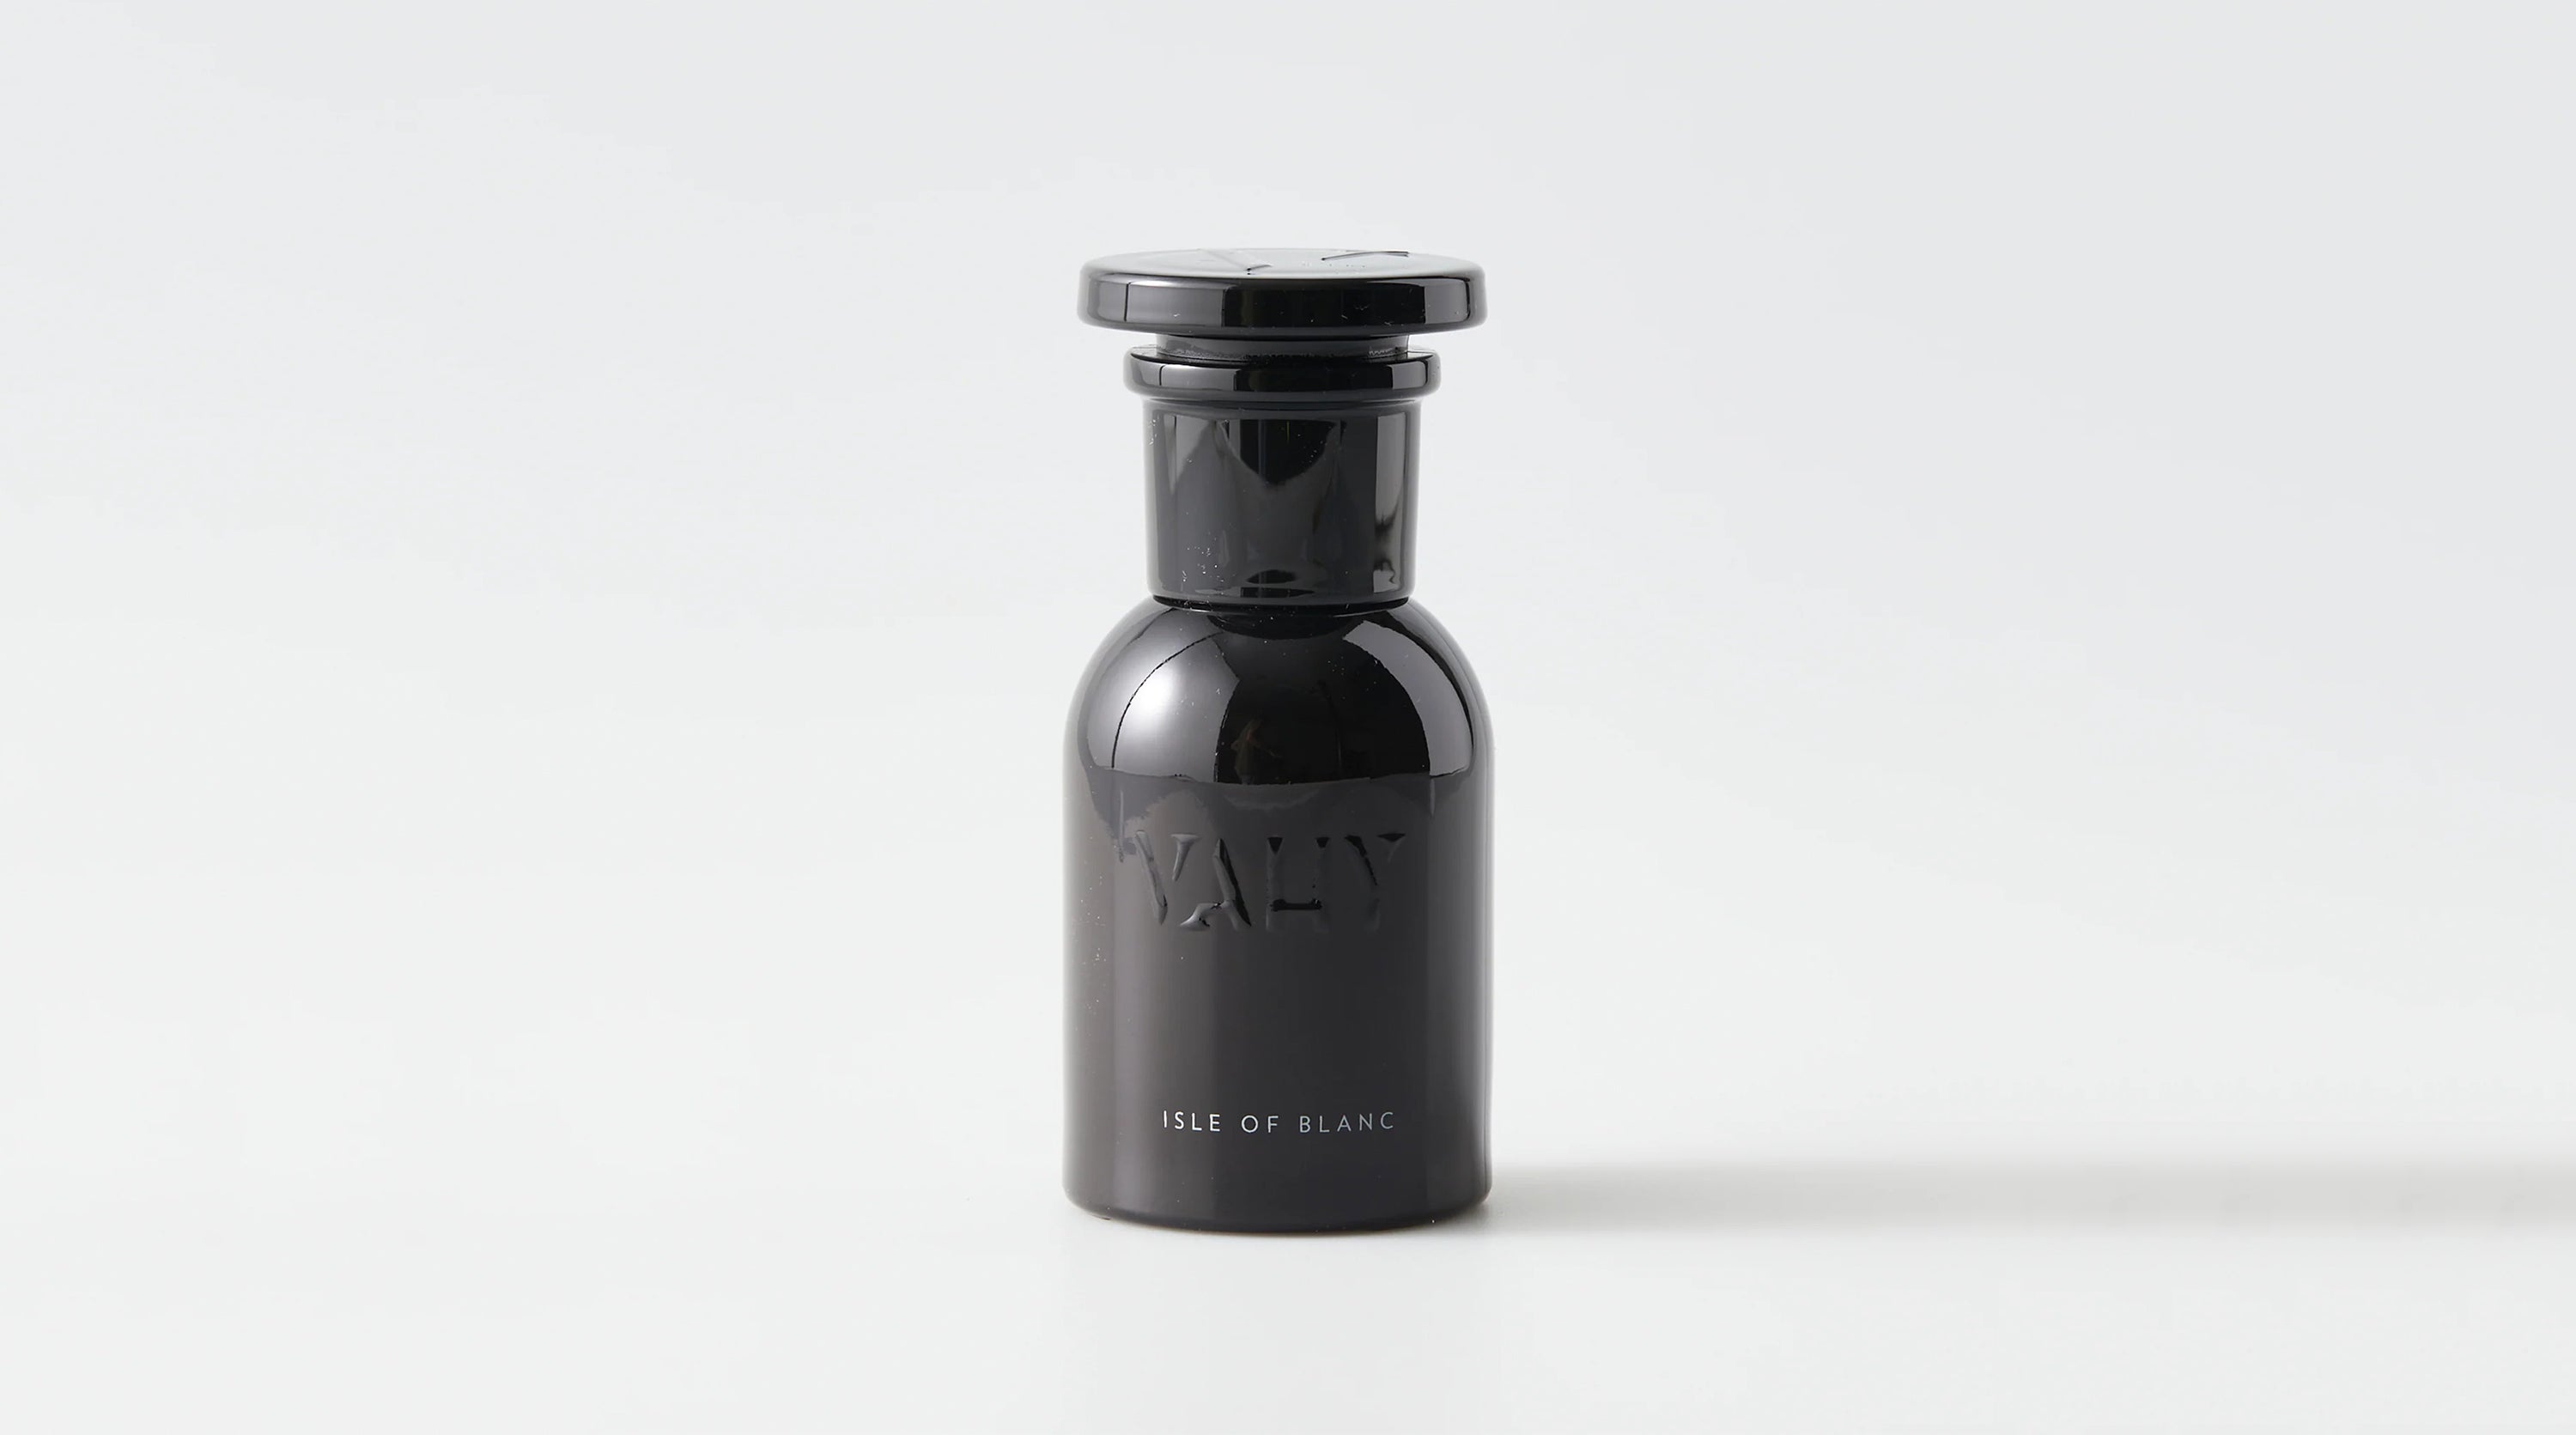 Isle of Blanc by Vahy 100% Natural Perfume at Sensoriam